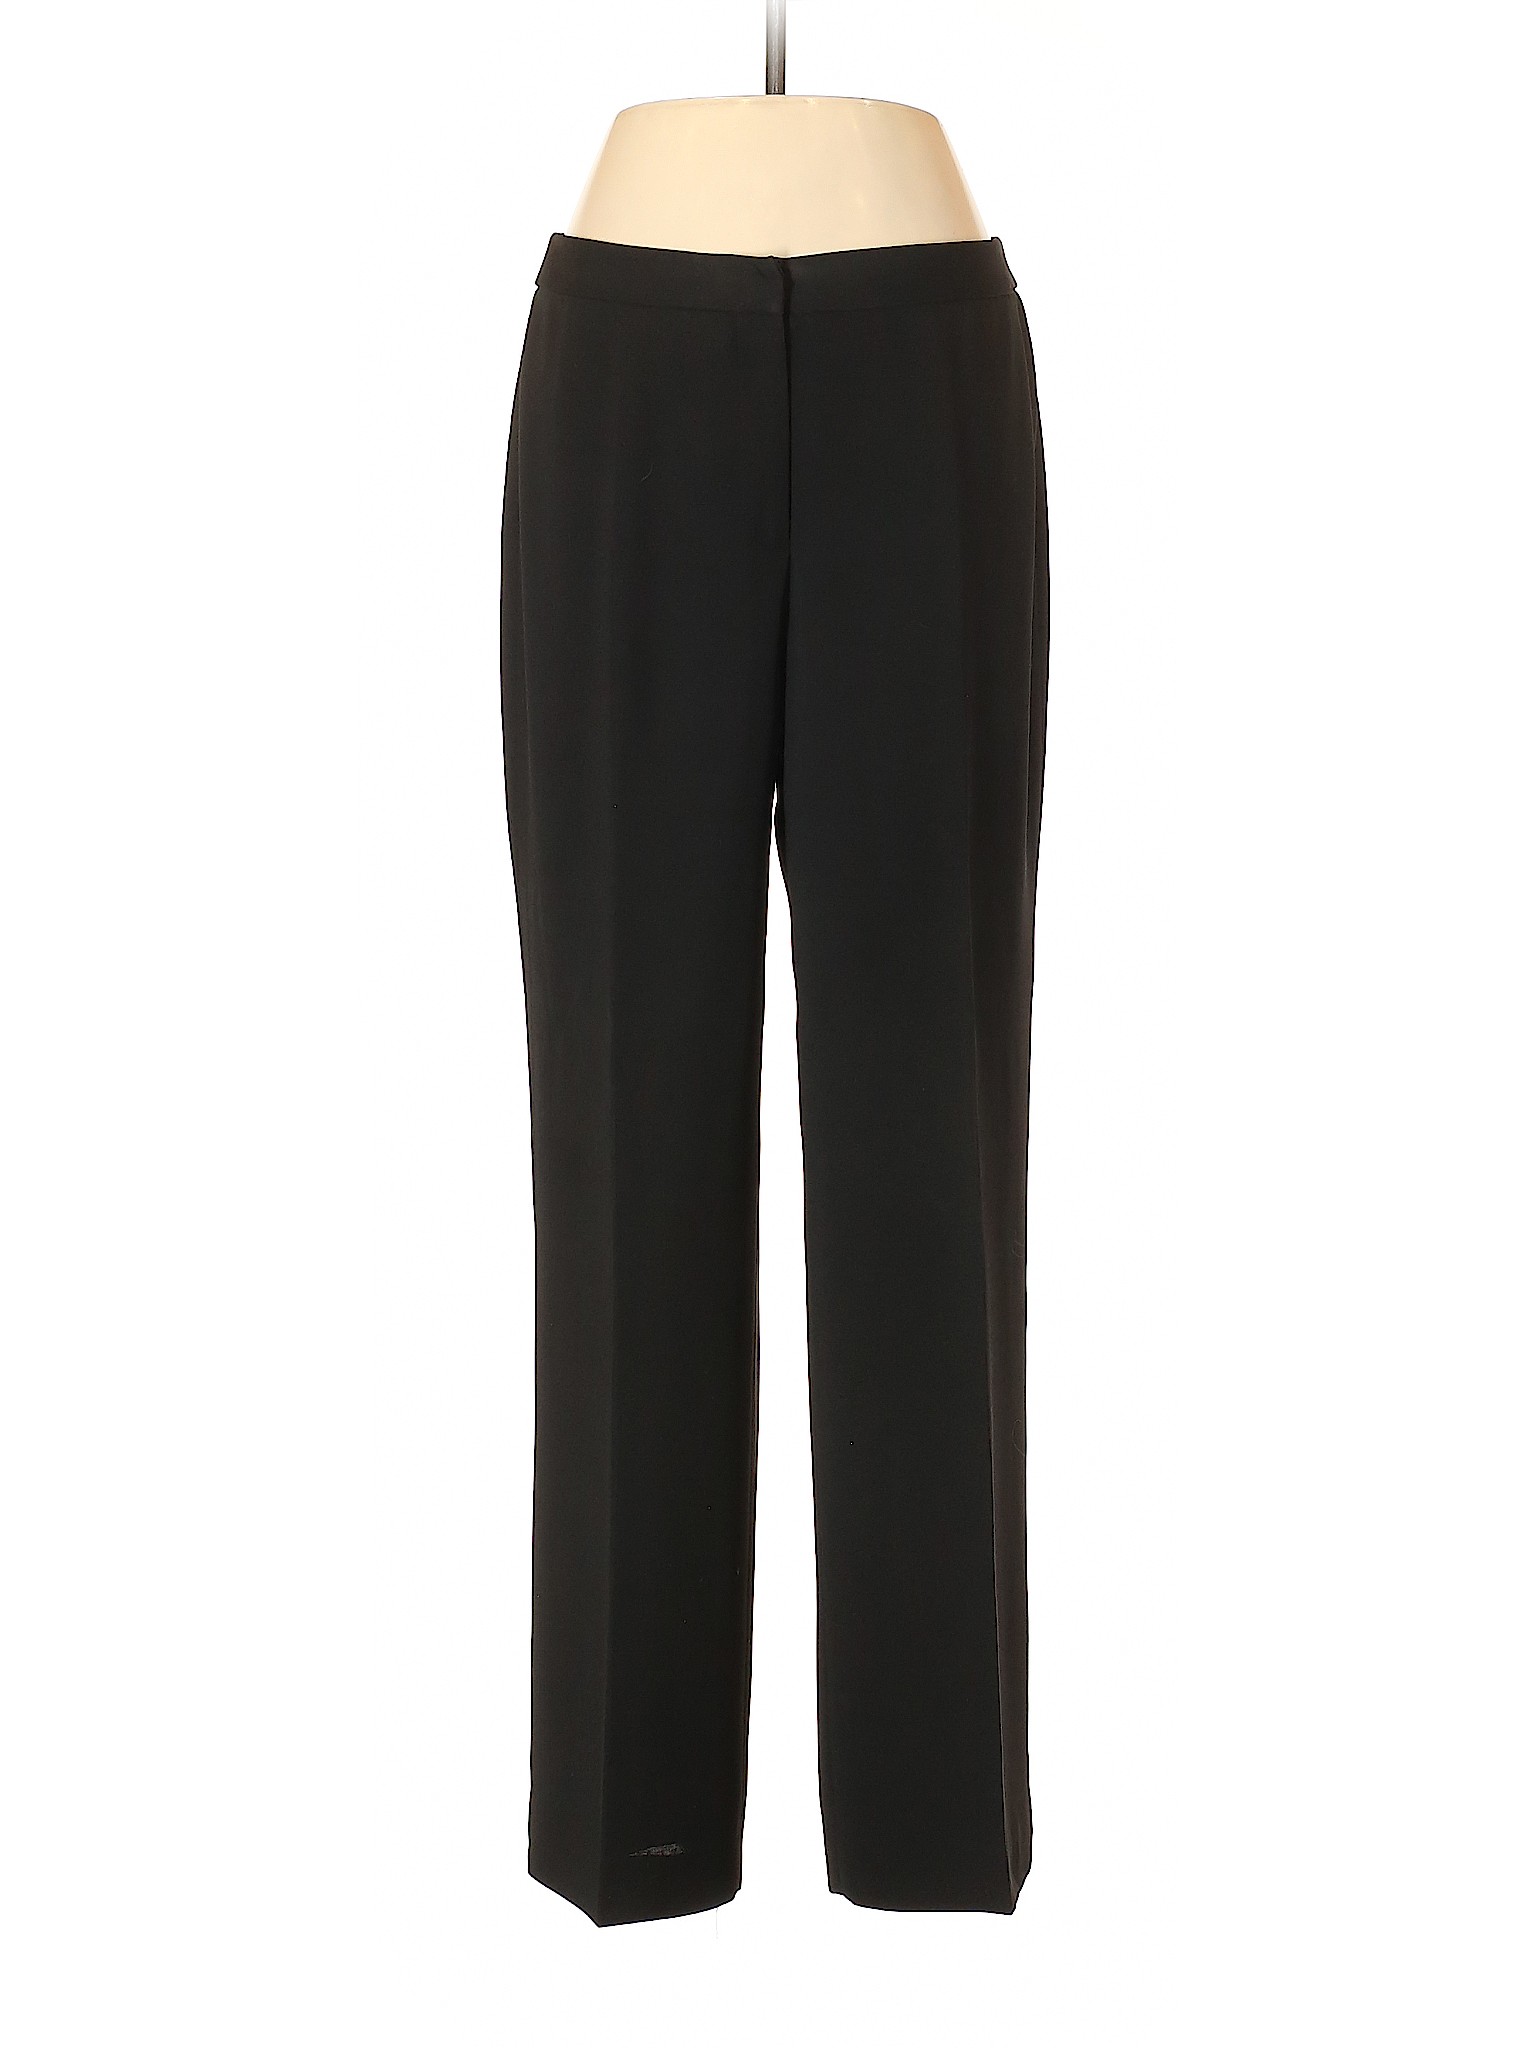 Charter Club Women Black Dress Pants 8 Petites | eBay